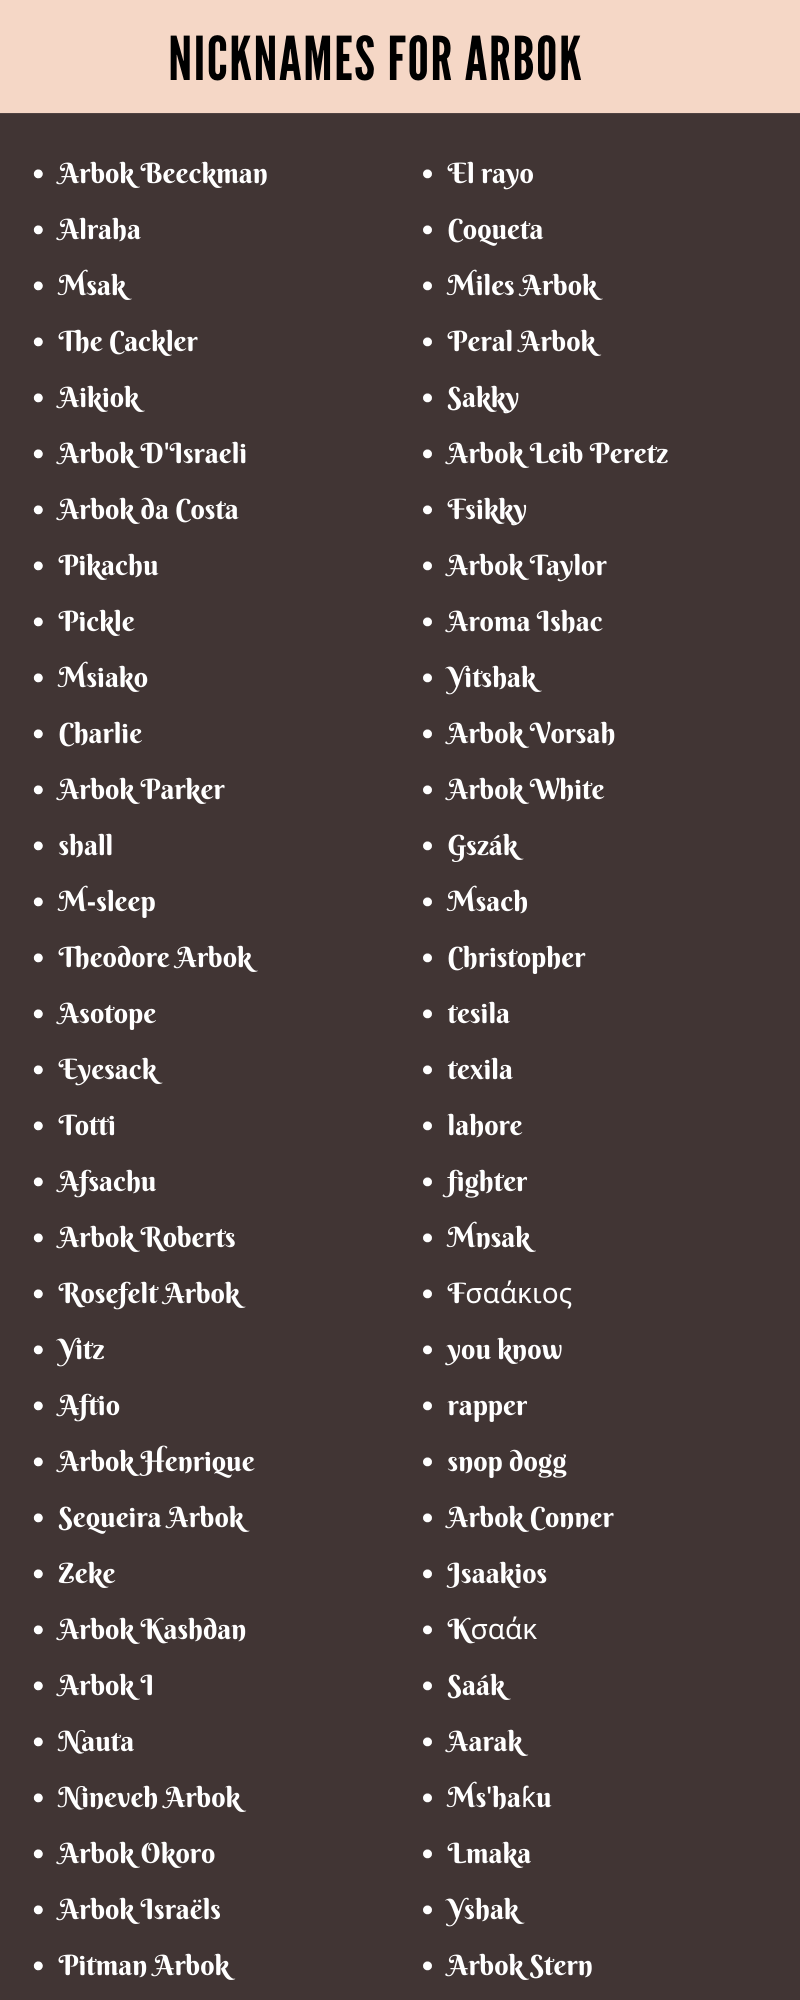 Nicknames for Arbok